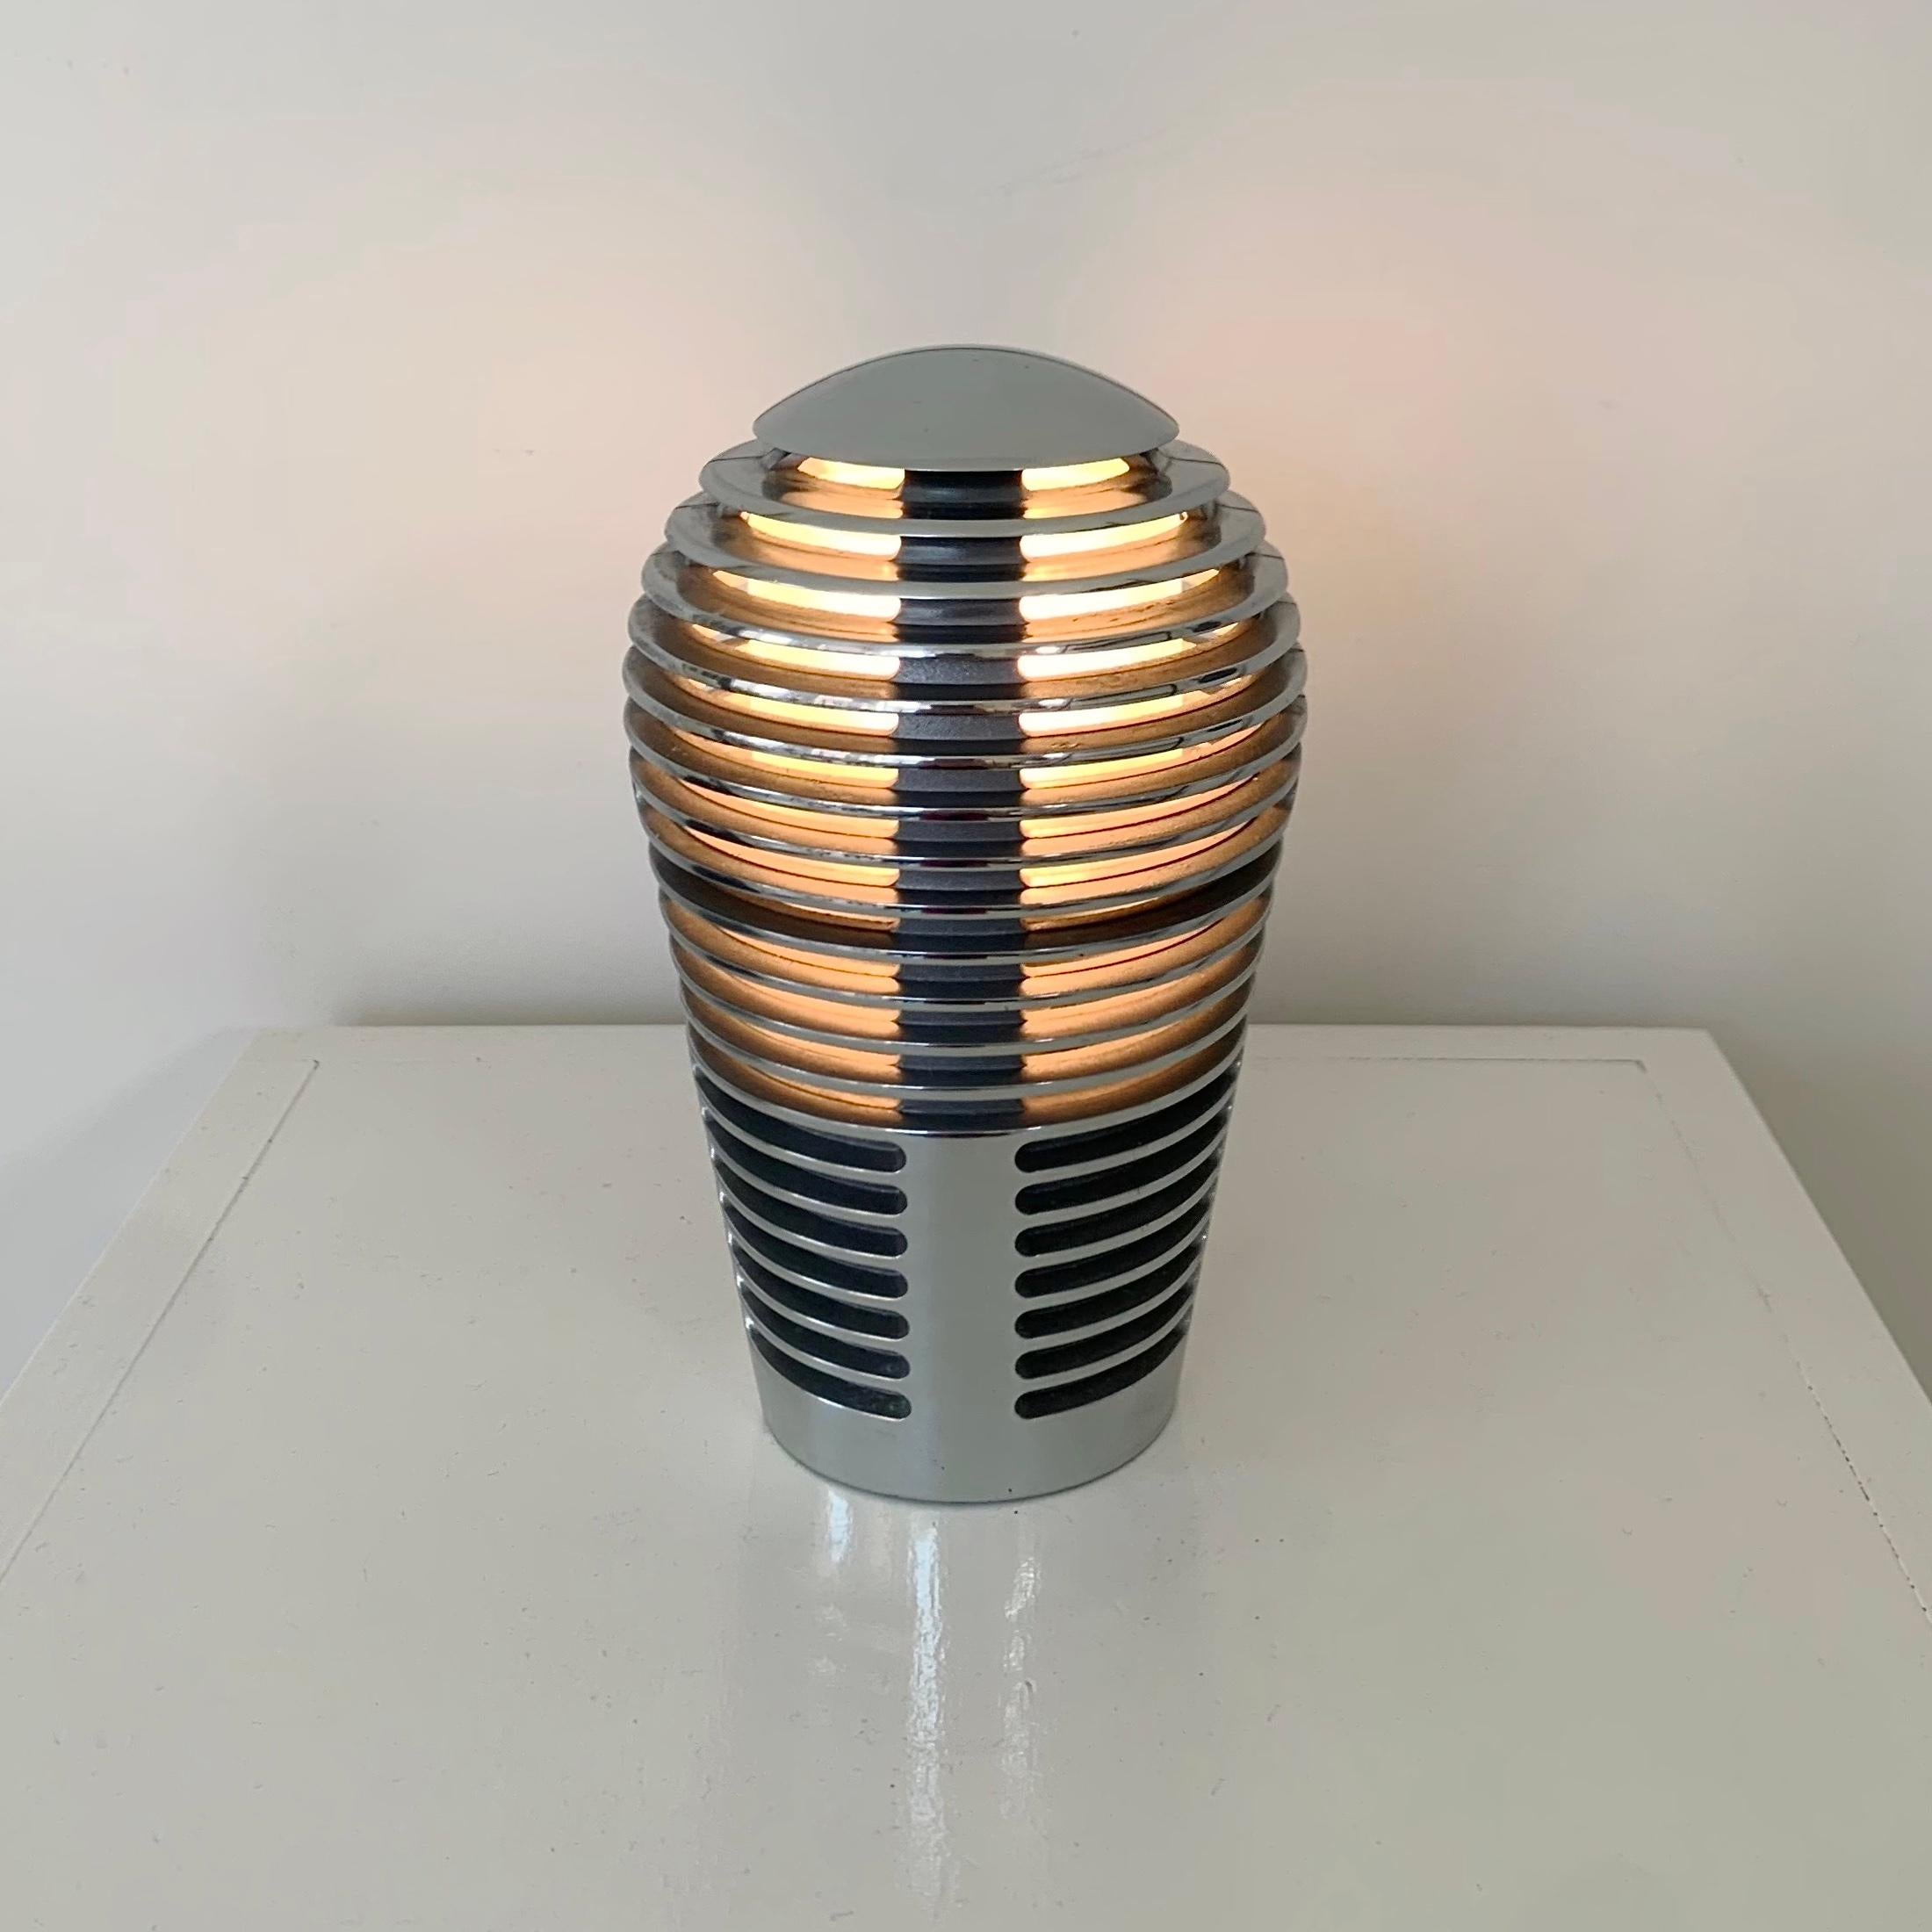 Spanish Metalarte Zen Table Lamp by Sergi & Oscar Devesa, 1984, Spain. For Sale